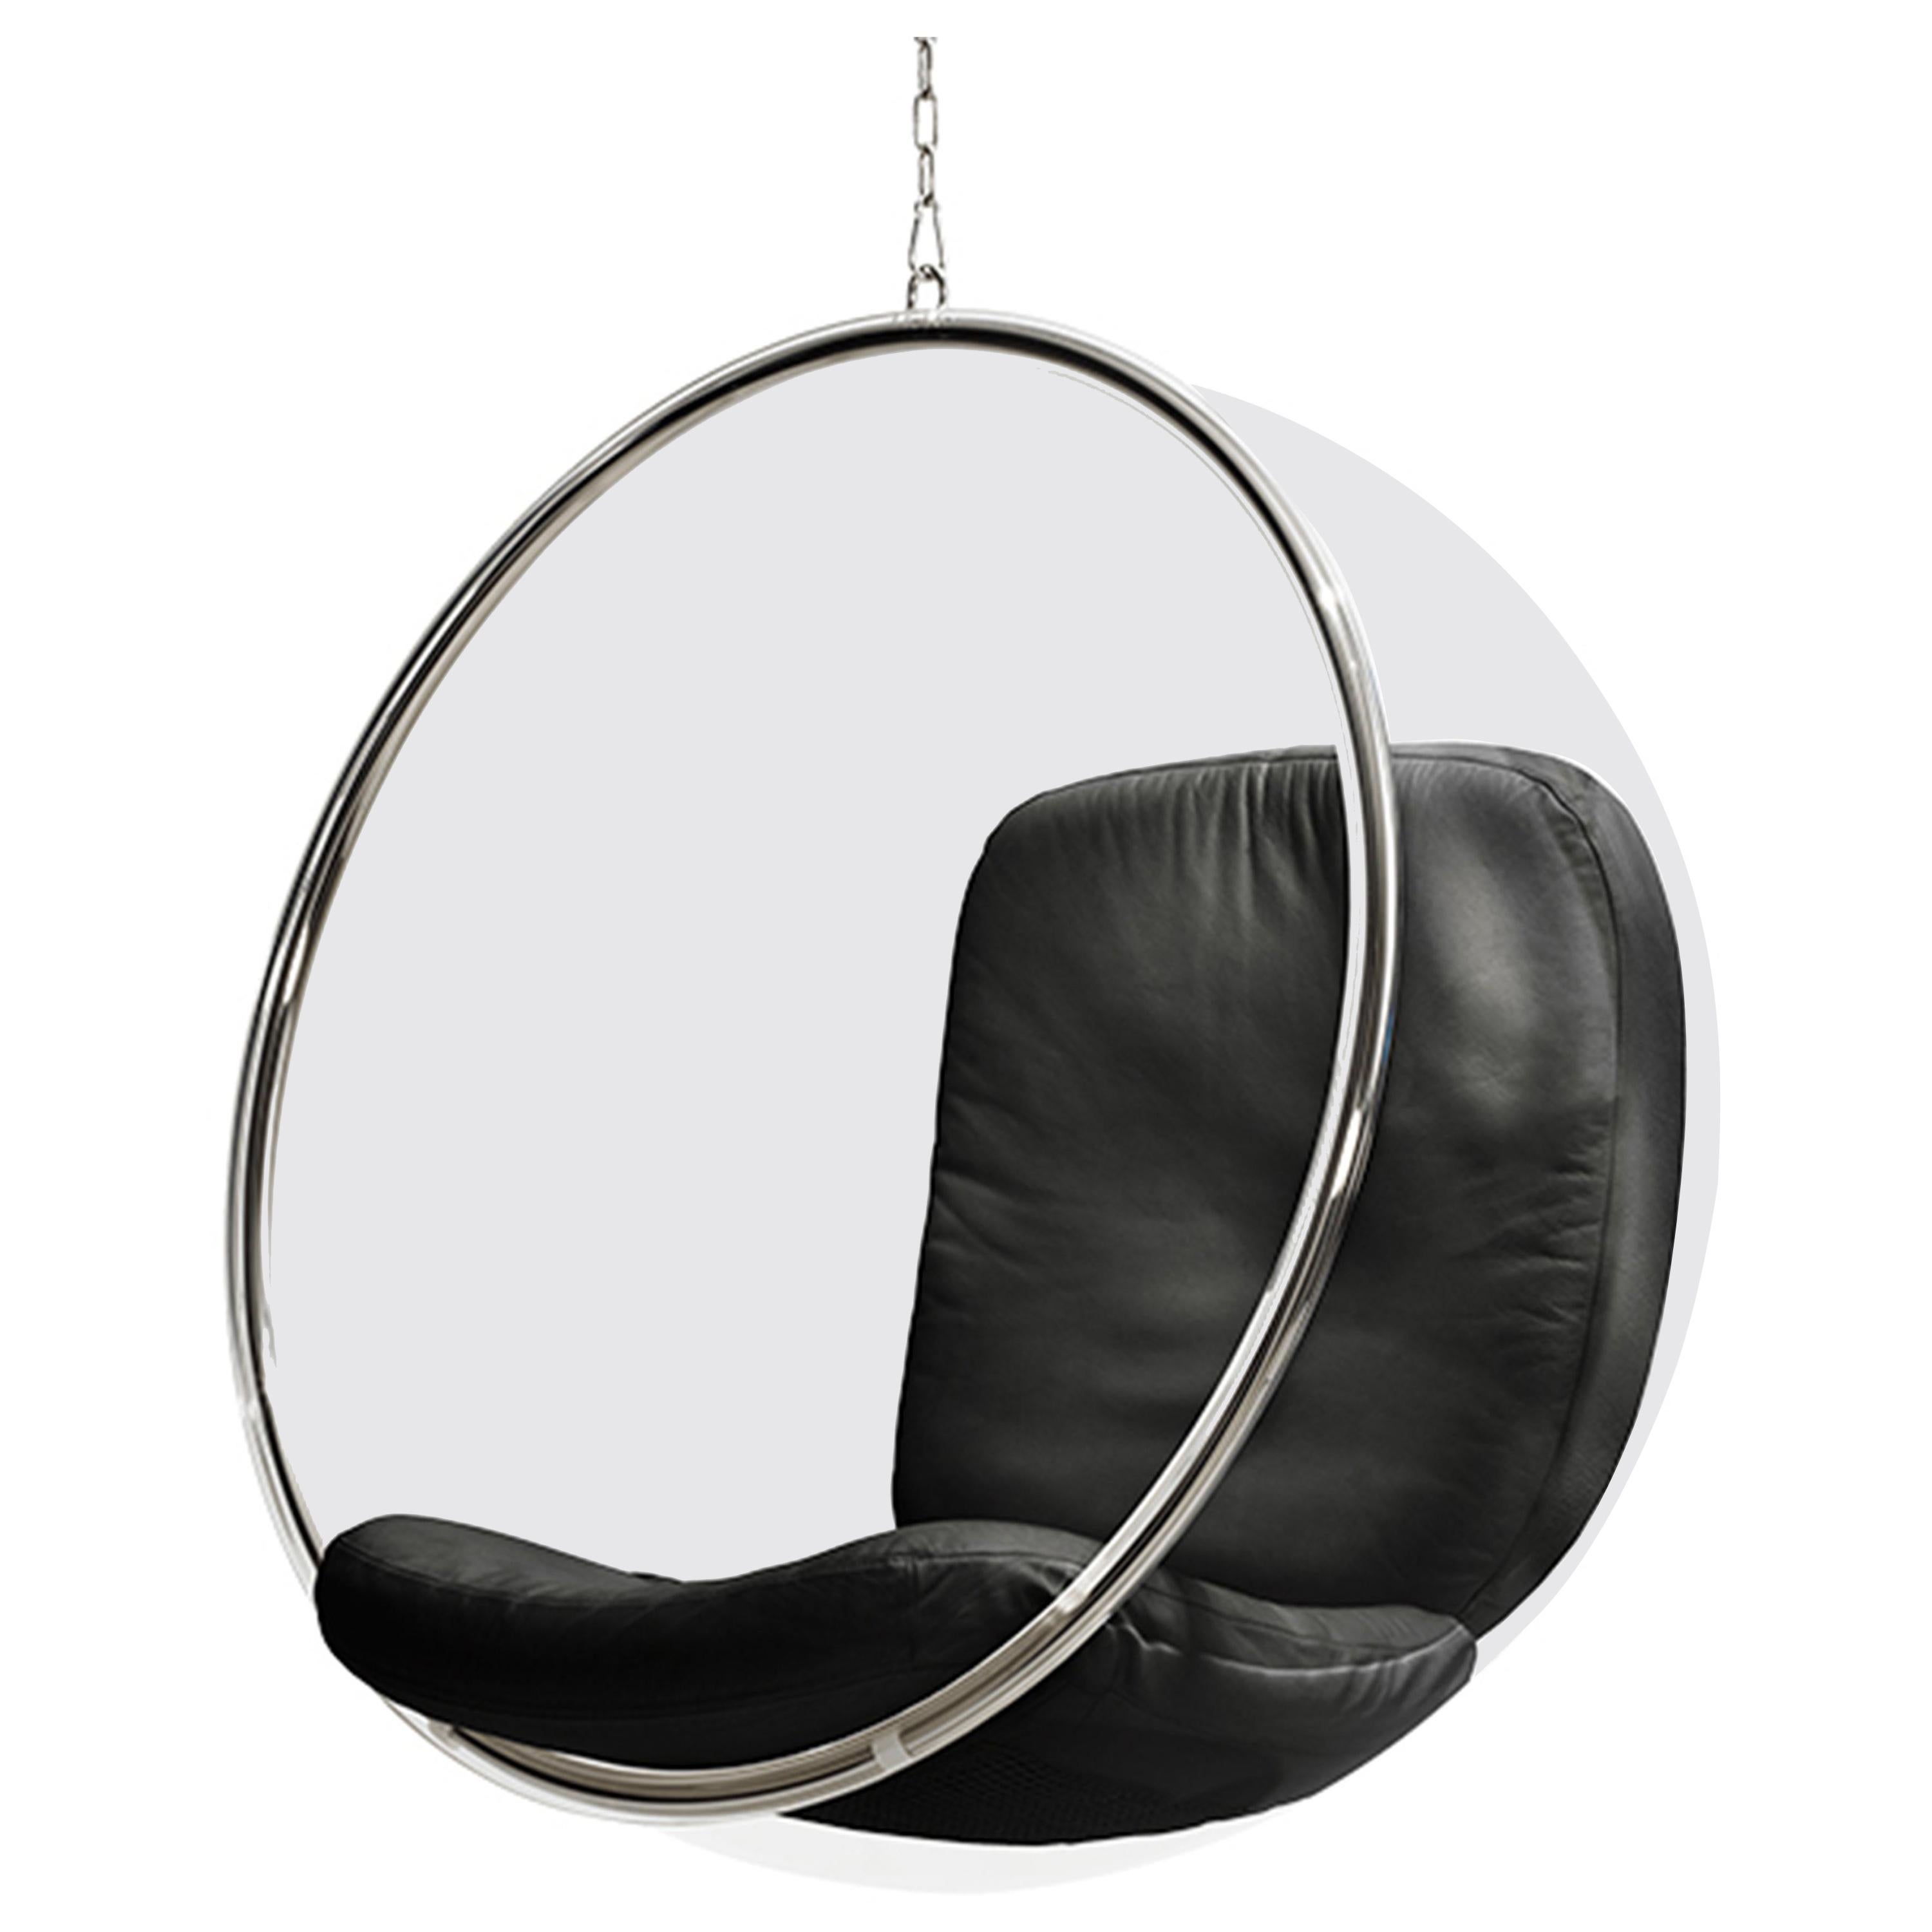 Covet: A Louis Vuitton Fiberglass Cocoon Chair